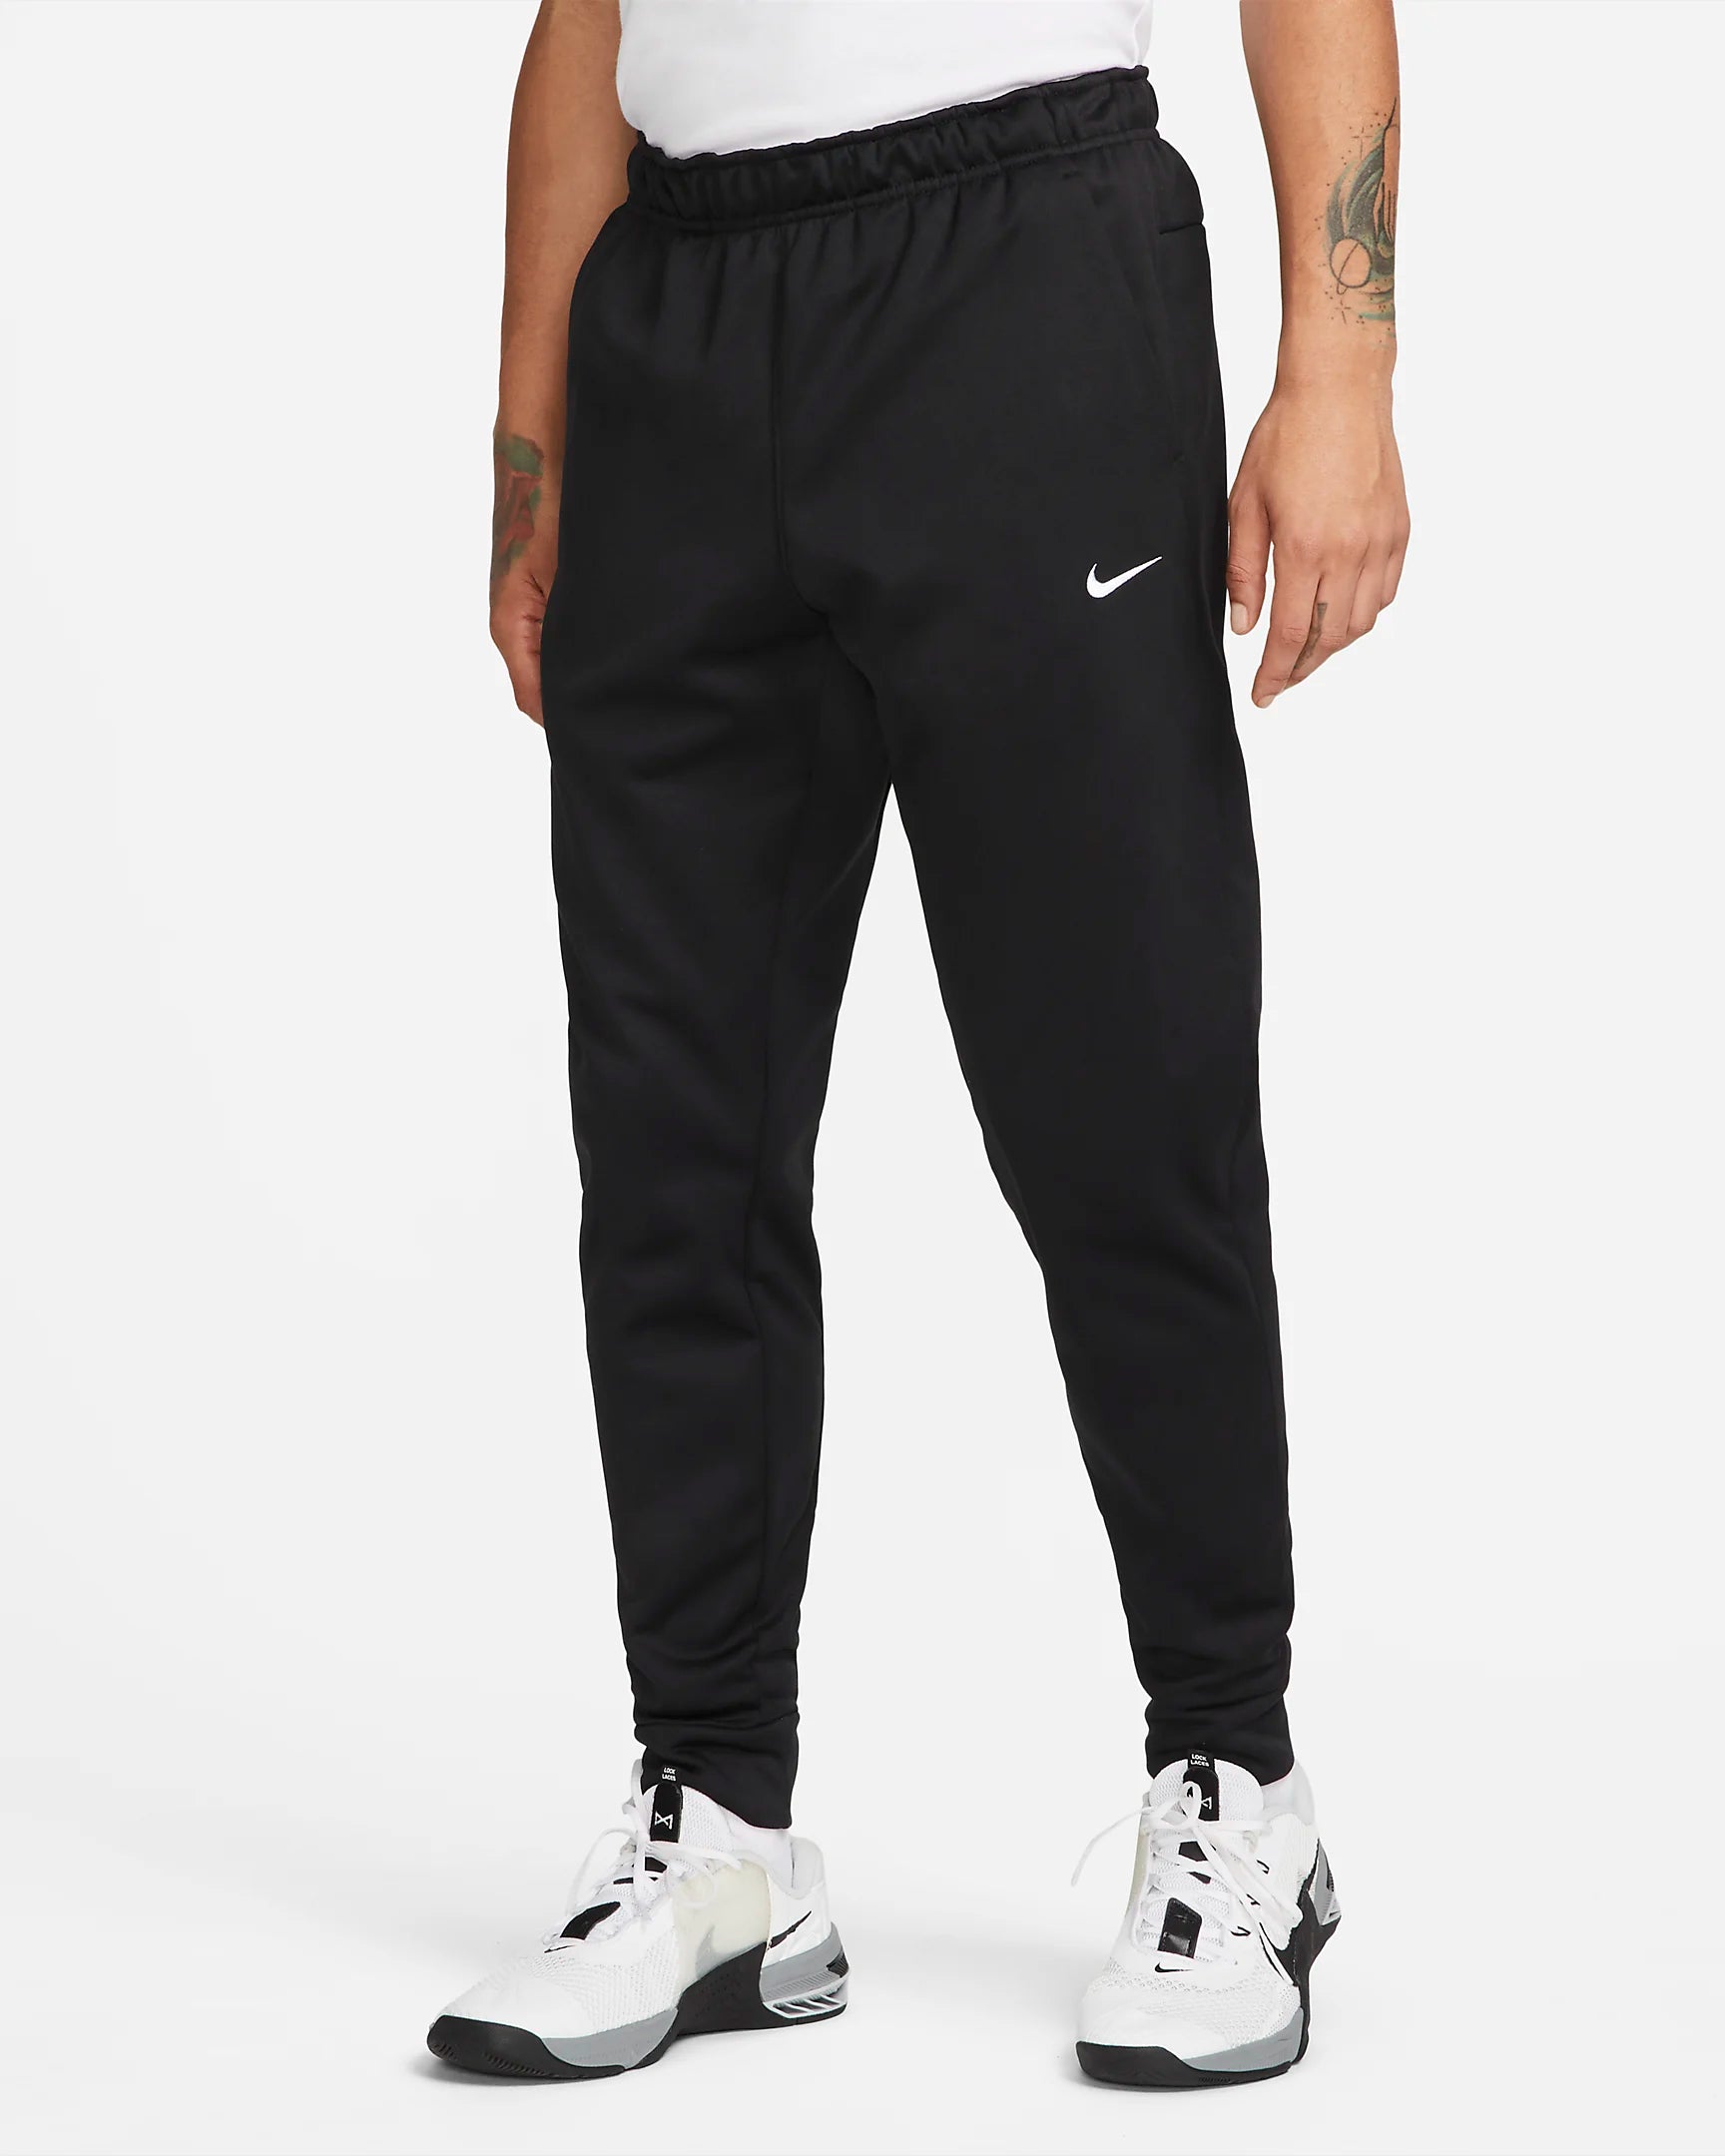 Pantaloni Nike Therma - neri